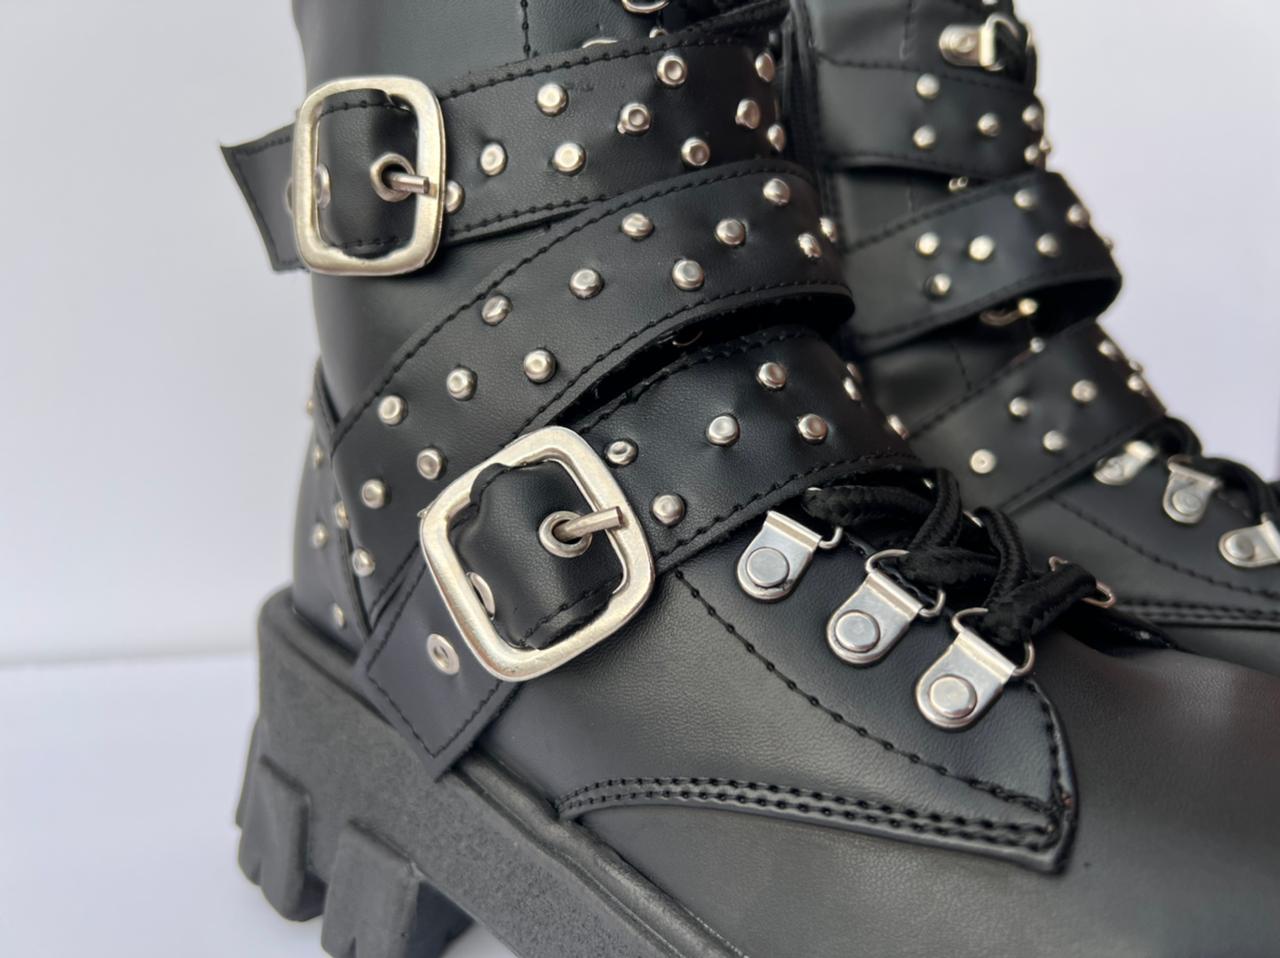 Botas negras - taches  Boots, Studded ankle boots, Shoe boots